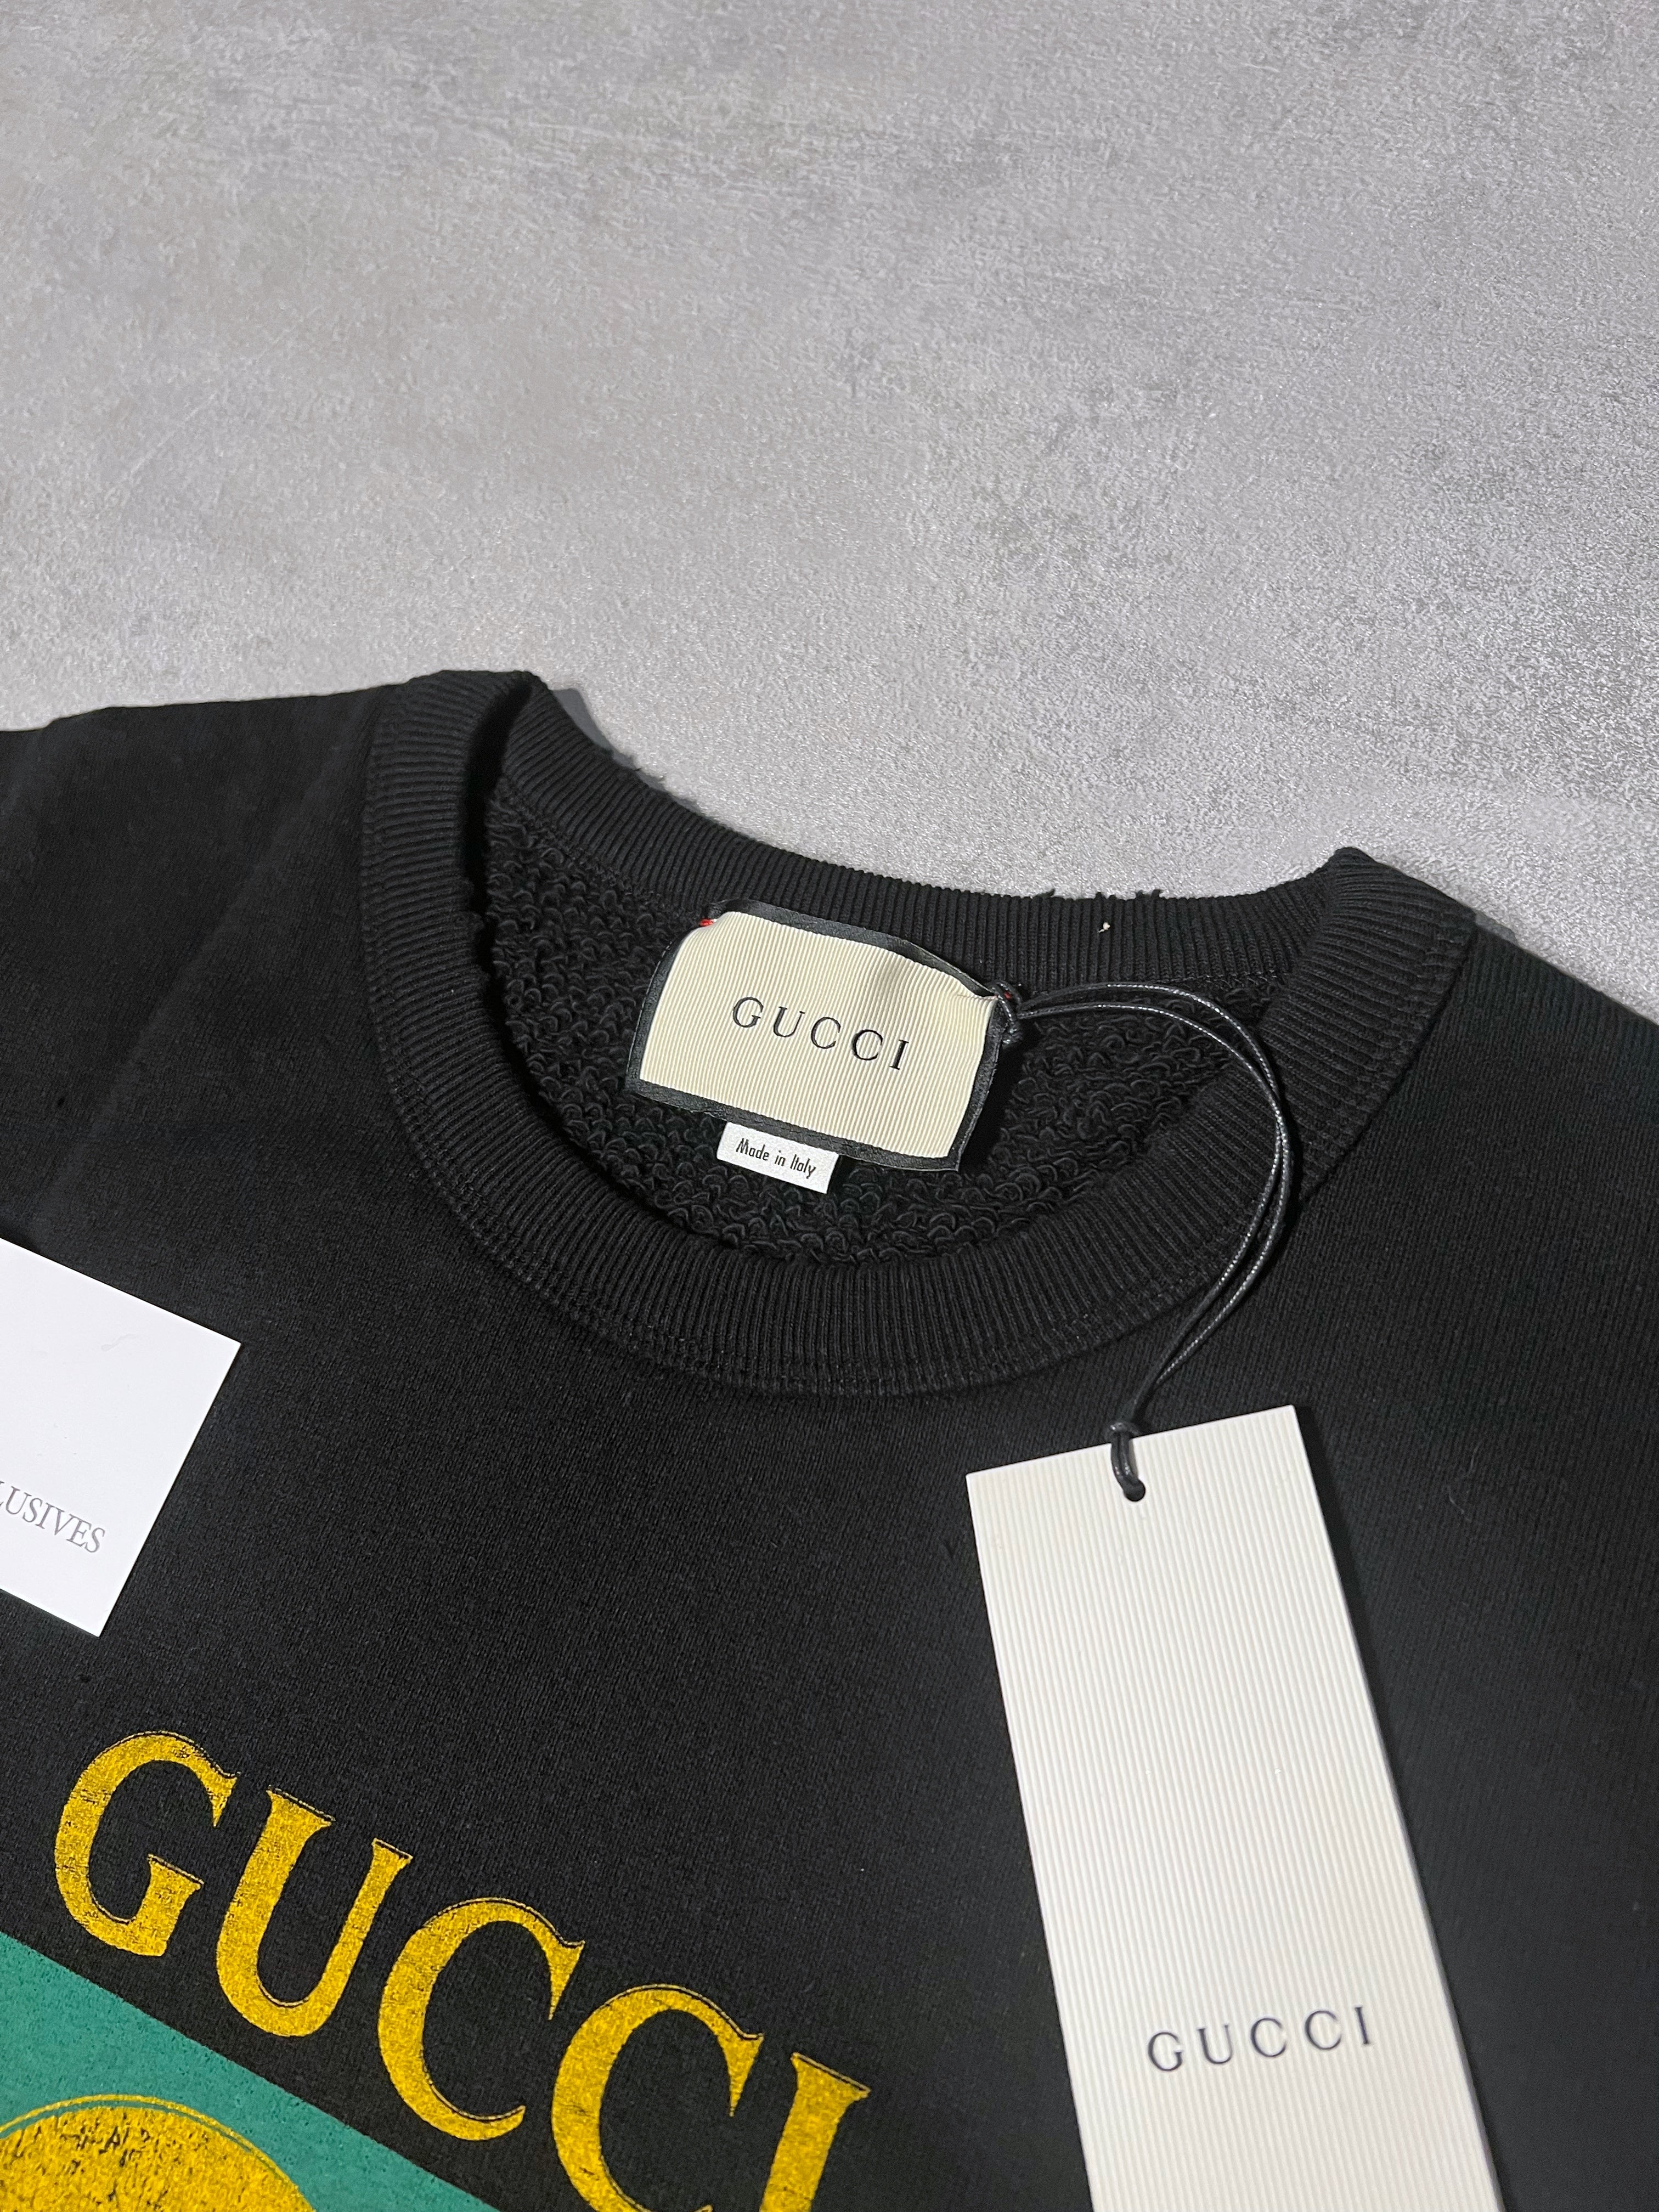 Gucci Distressed Logo Sweater